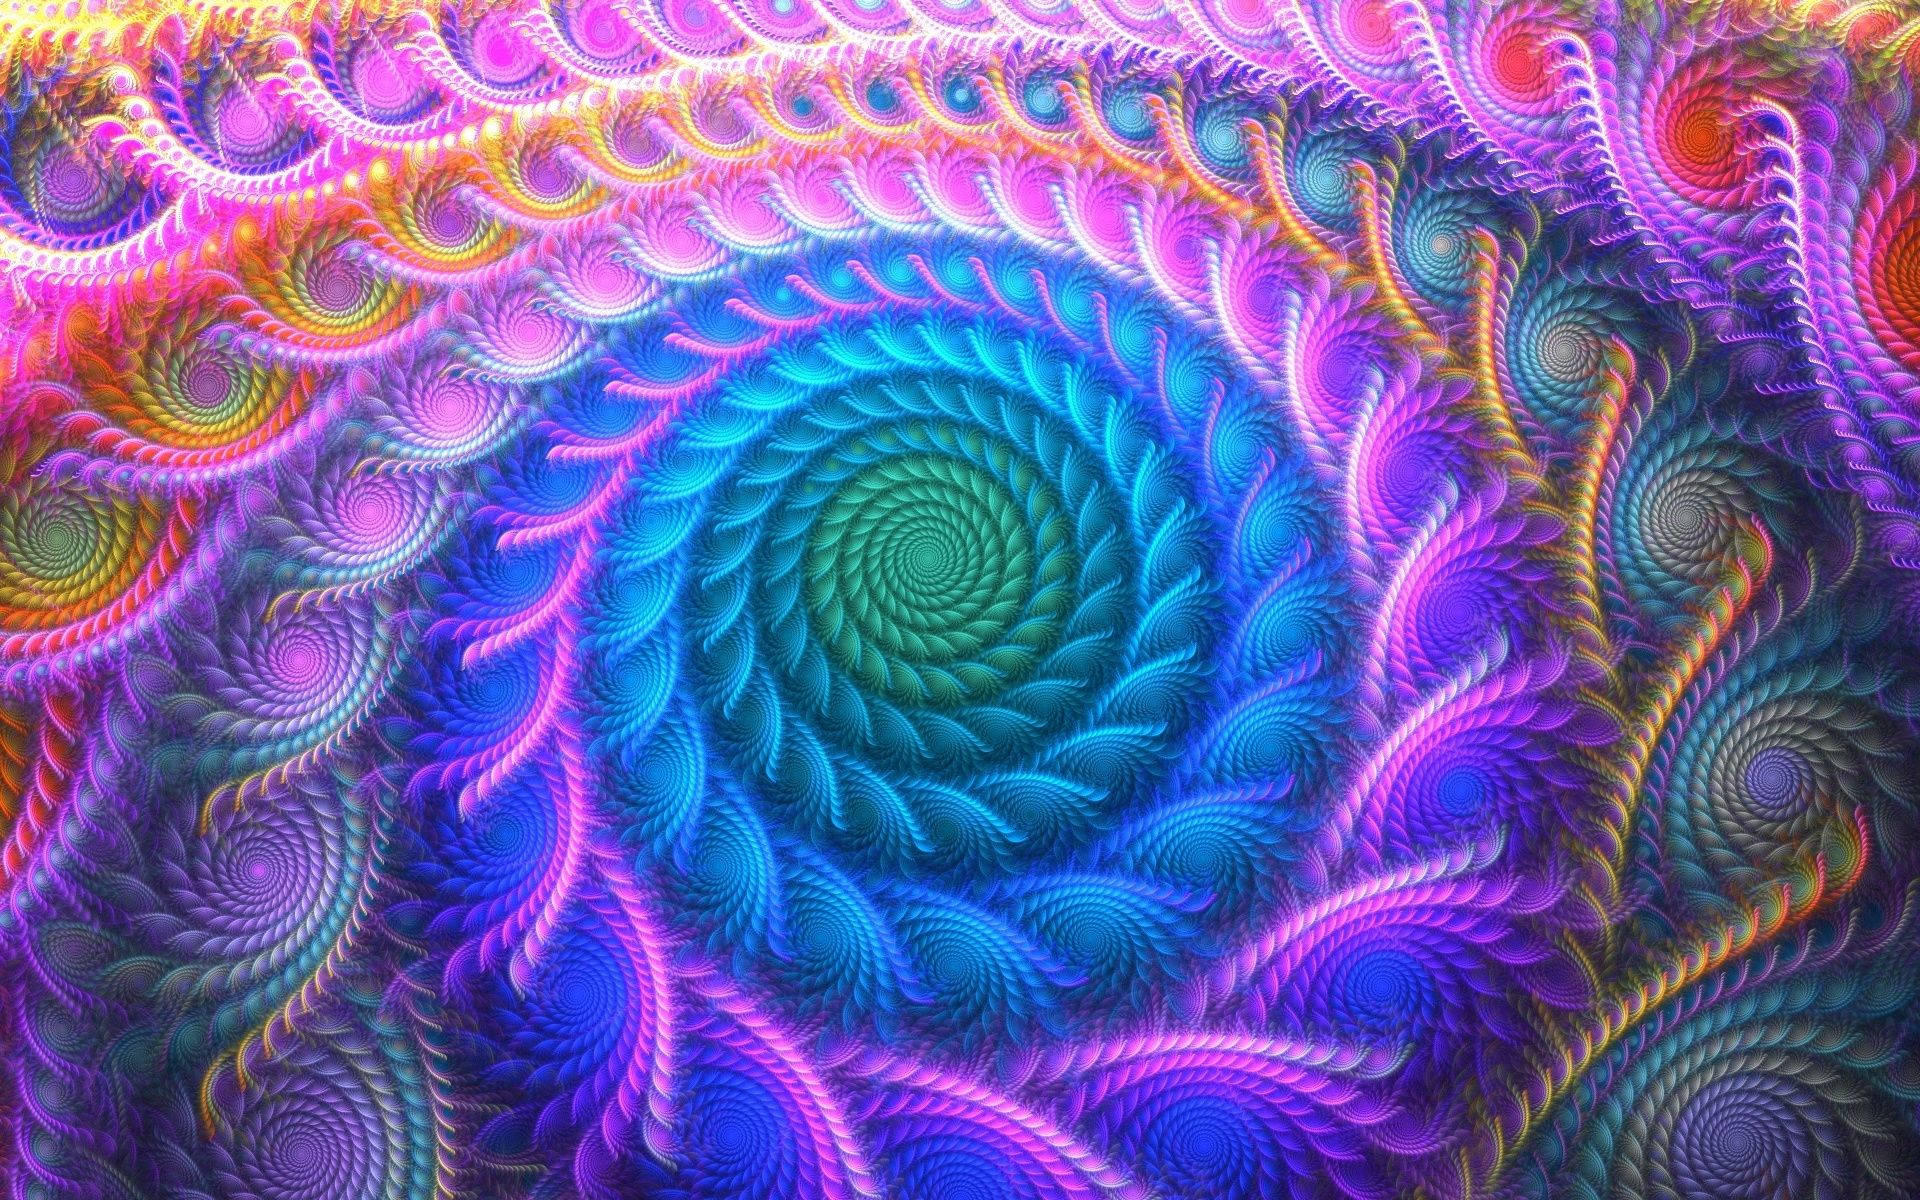 Amazing infinity spiral psychedelic art wallpaper.